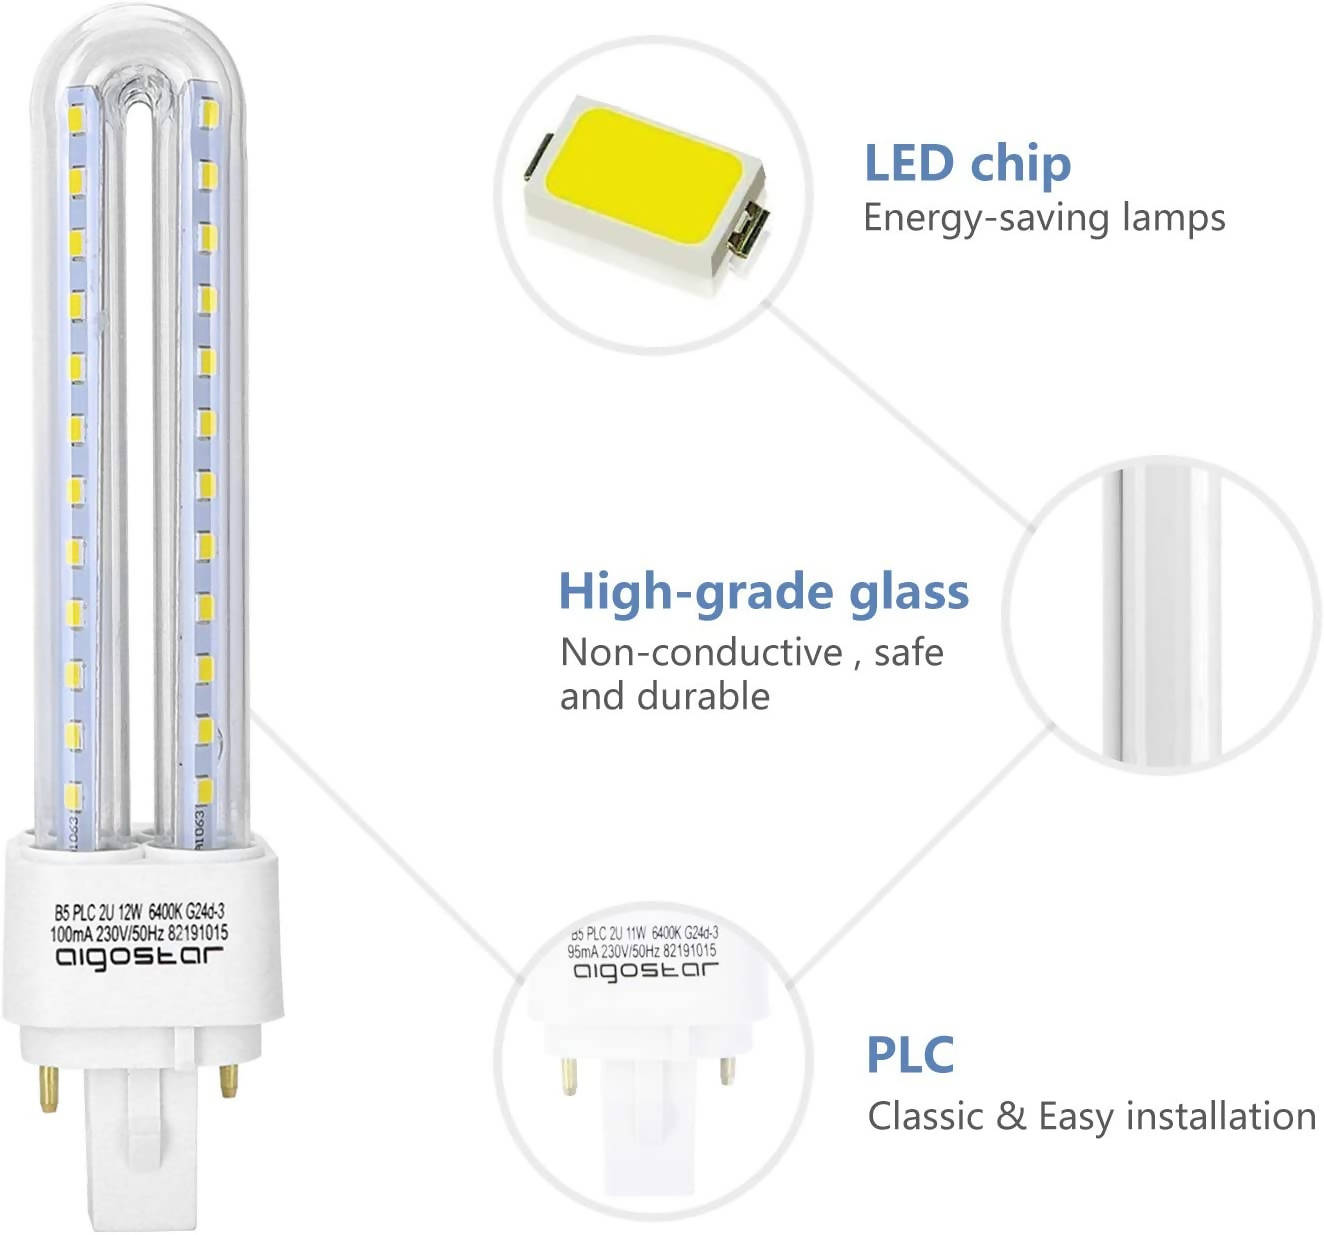 LED Cool White 12 W PLC G24 Bulb Mains Bulb Lamp 6400 K 1200 Lumen Beam Angle 360 Degree 2U Bulbs 5 Pieces Energy Saving